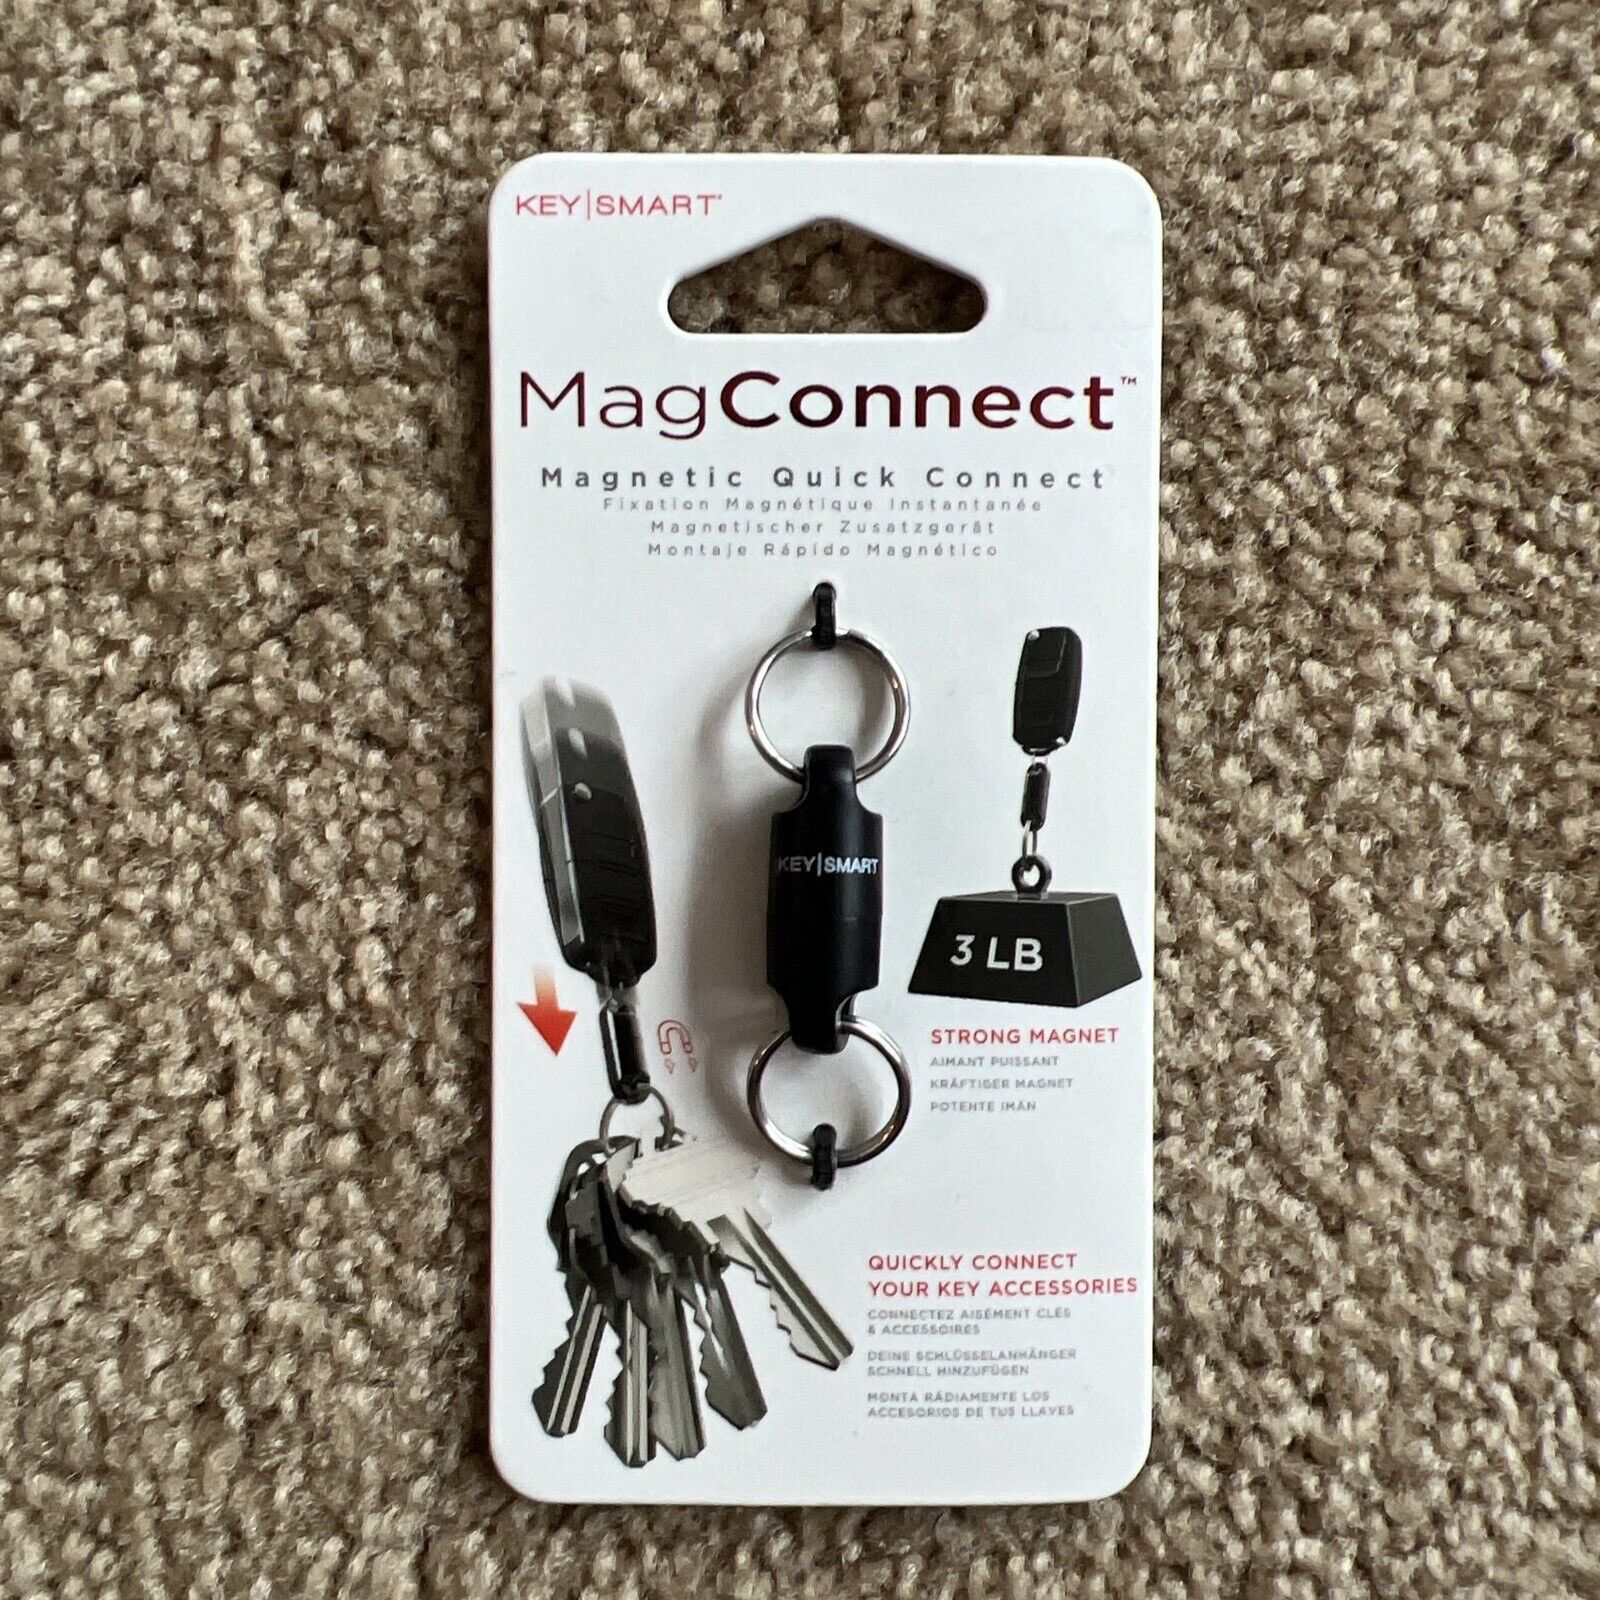 Keysmart Accessories Bundle: MagConnect Keychain Quick Connect & Expansion Pack